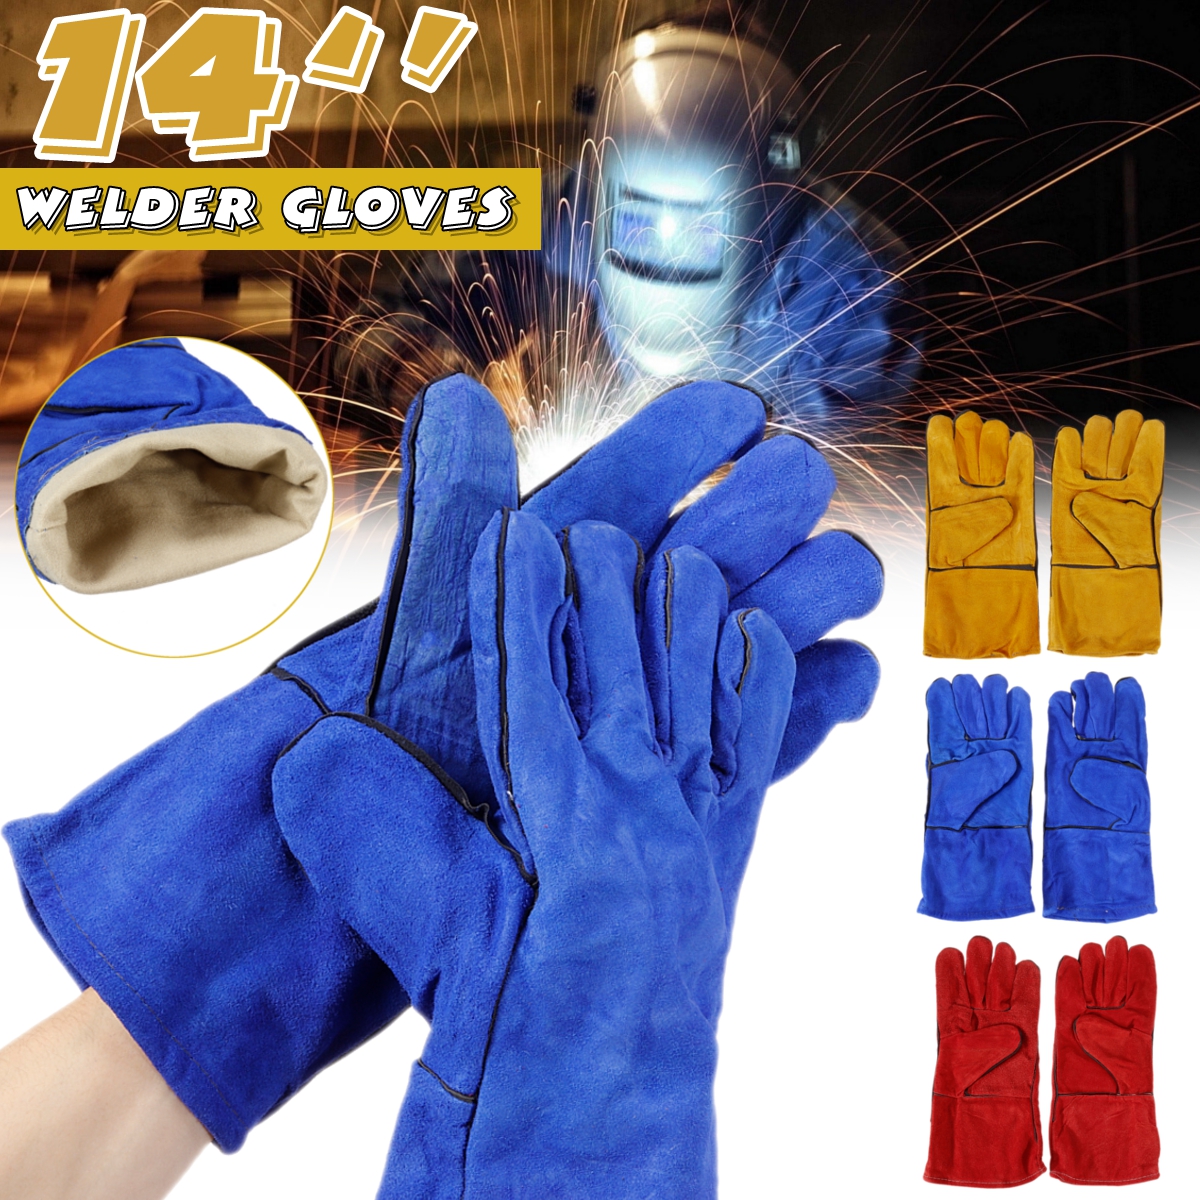 2PCS-14quot-Heavy-Duty-Gardening-Welder-Gloves-Men-Women-Thorn-Proof-Non-Slippery-Leather-Work-1924044-1